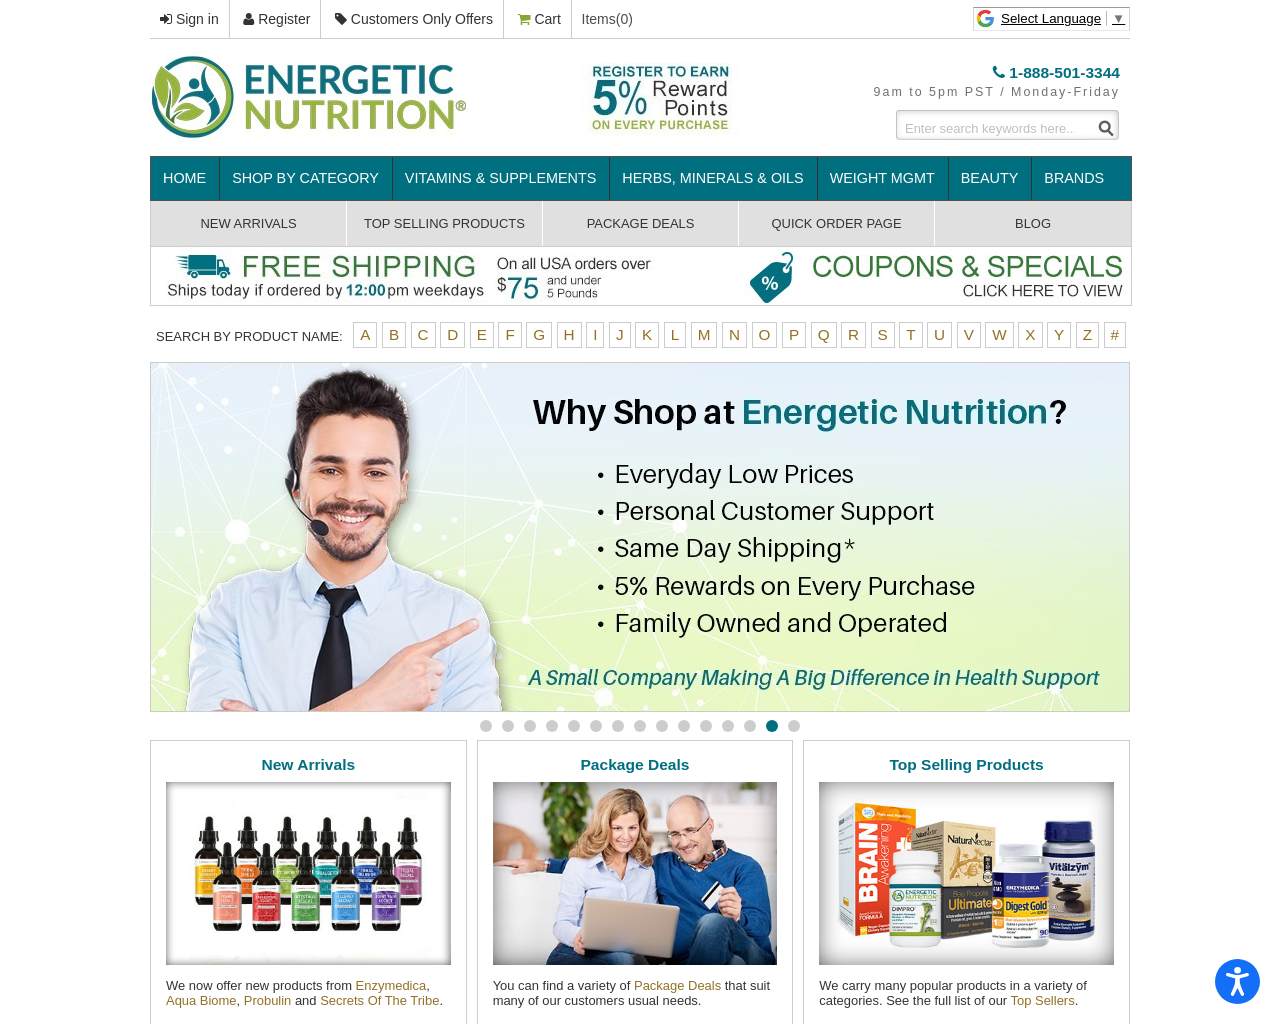 energeticnutrition.com